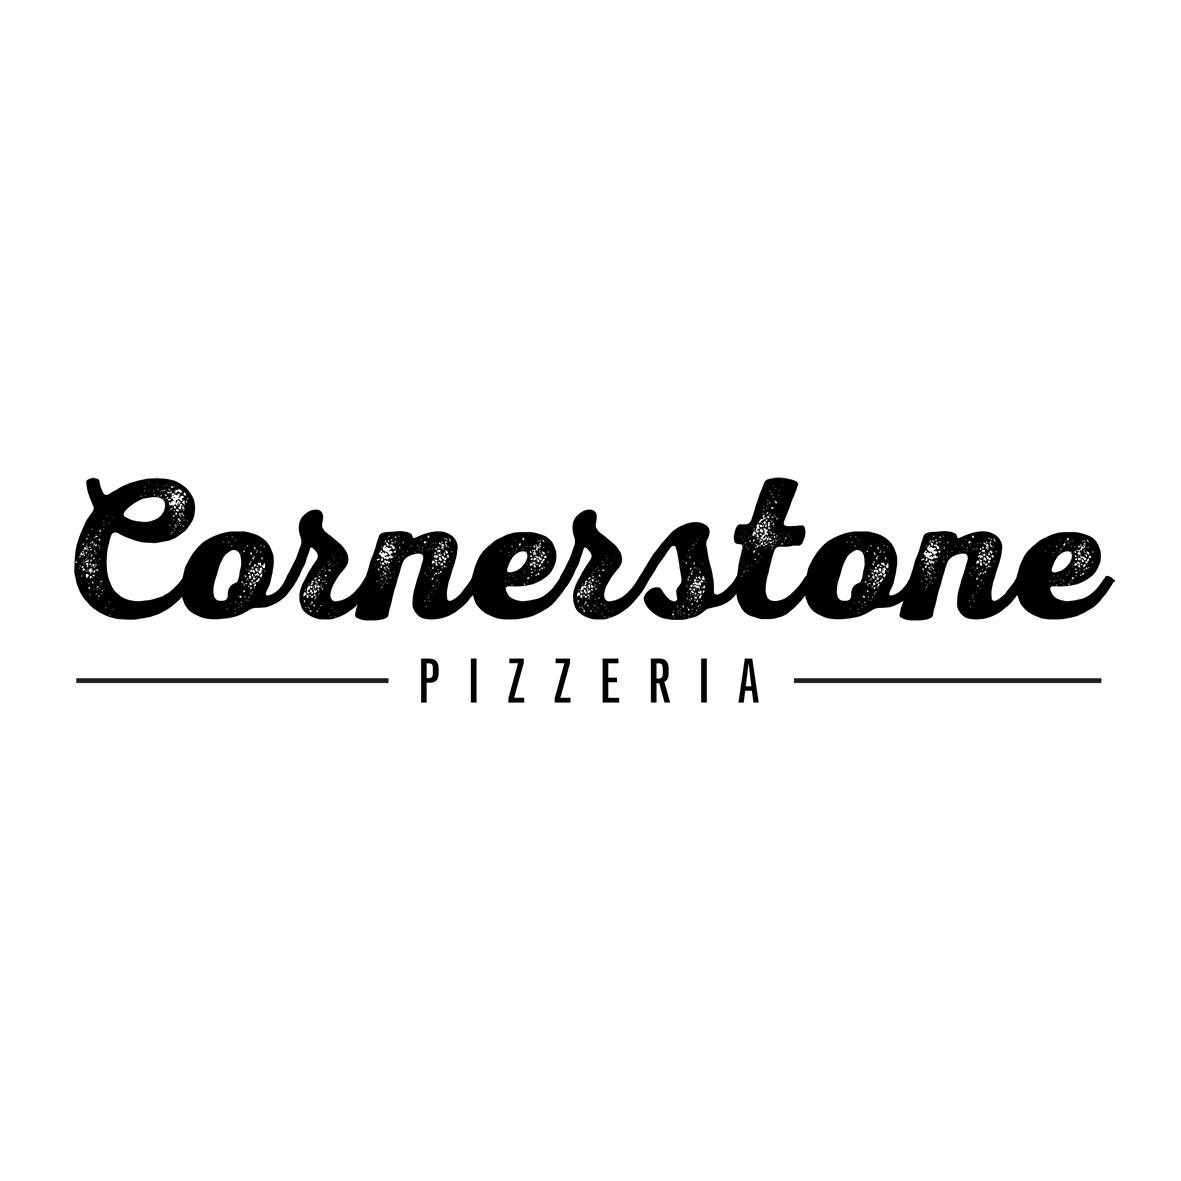 Cornerstone Pizzeria